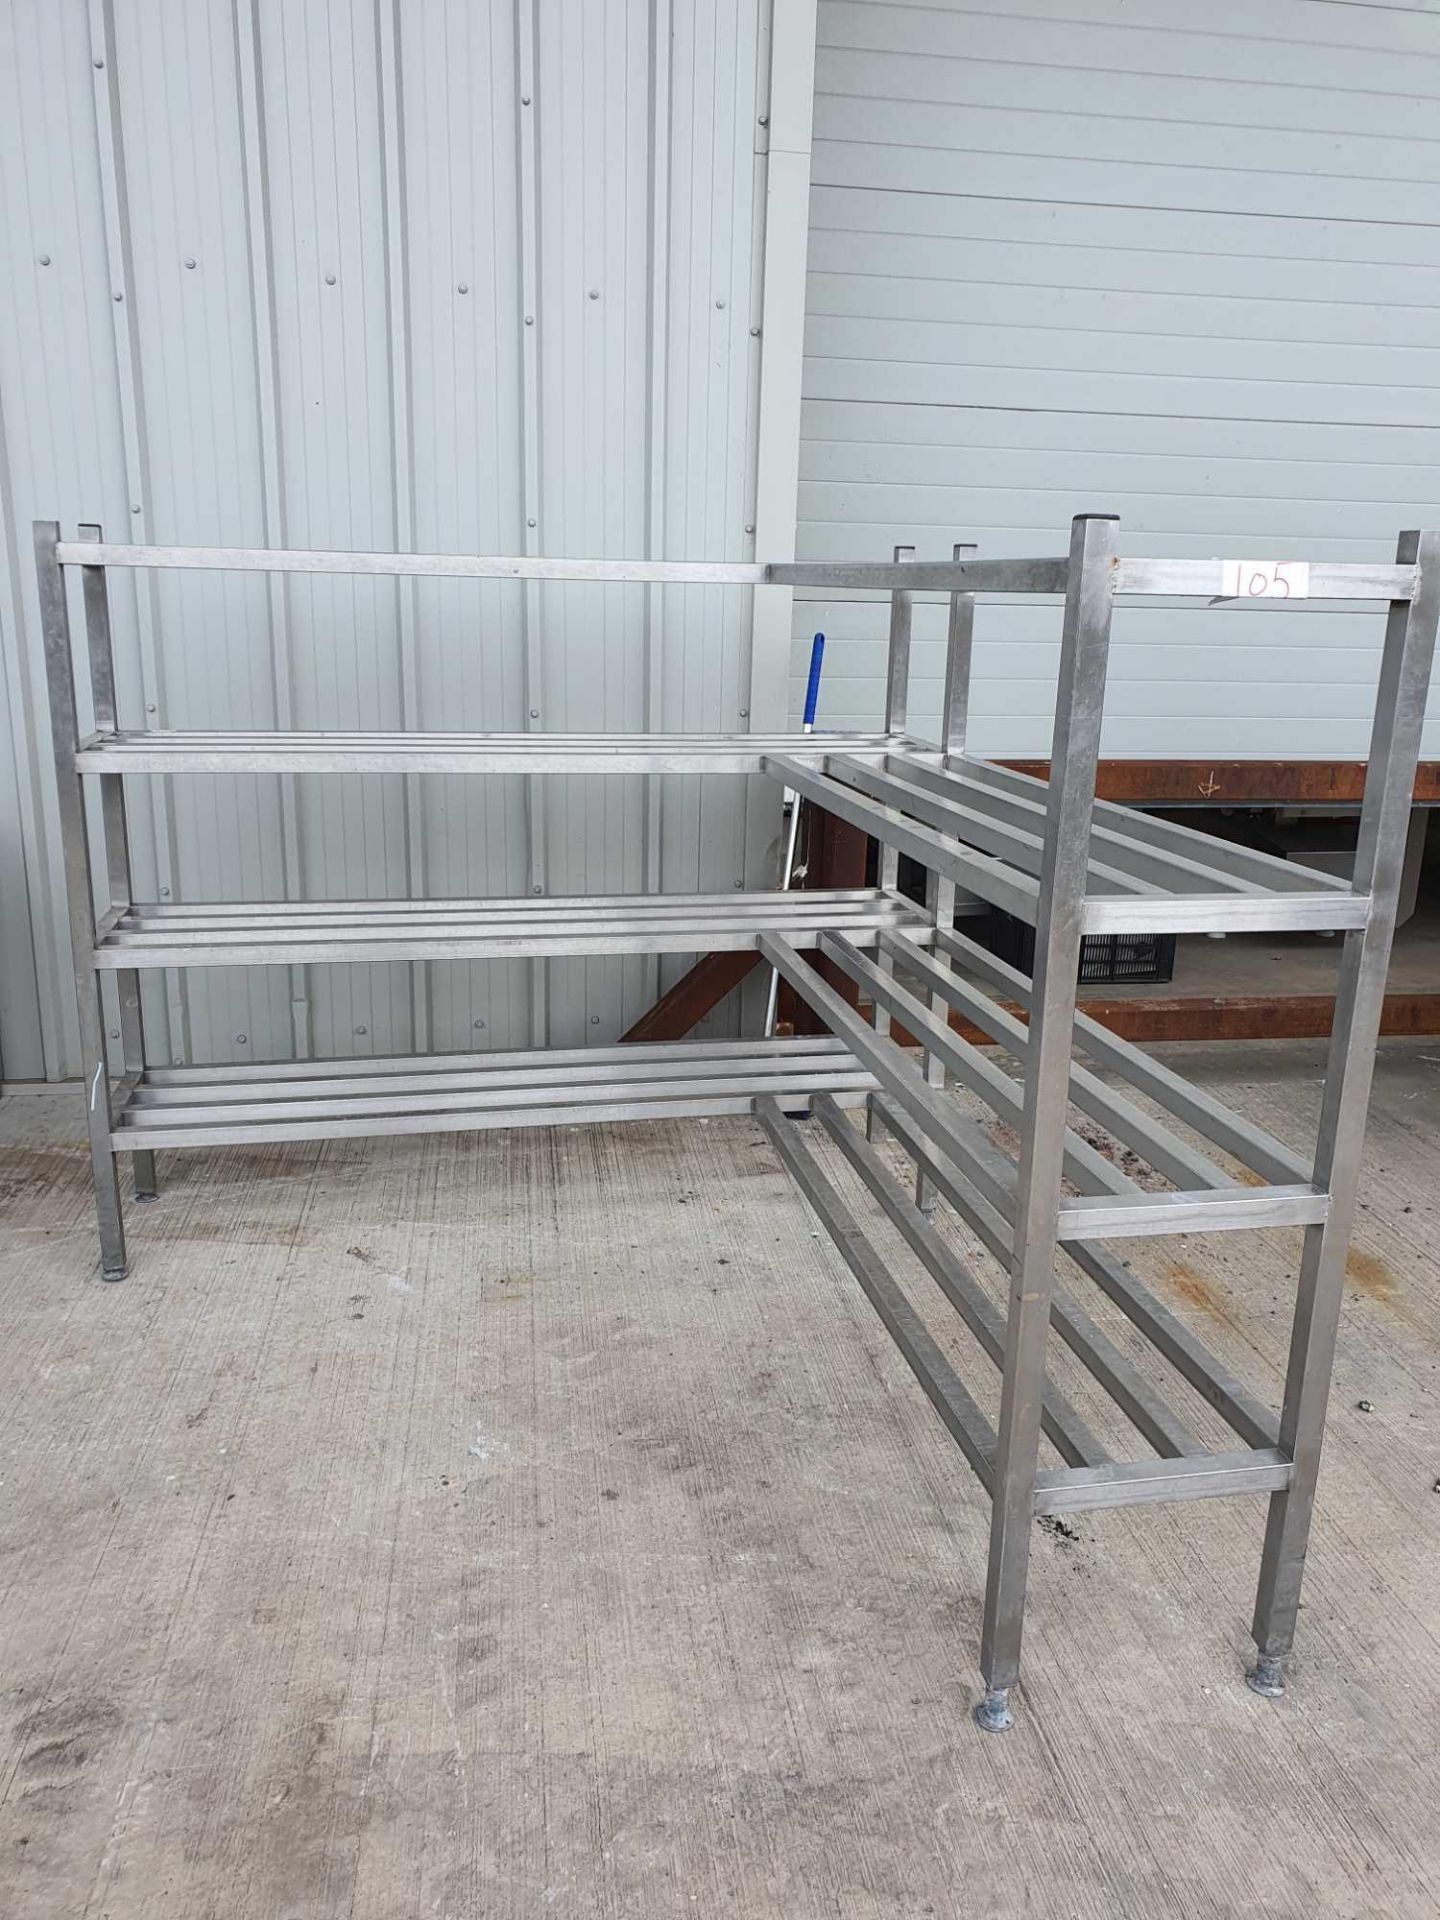 Stainless steel 4 tier corner shelve unit